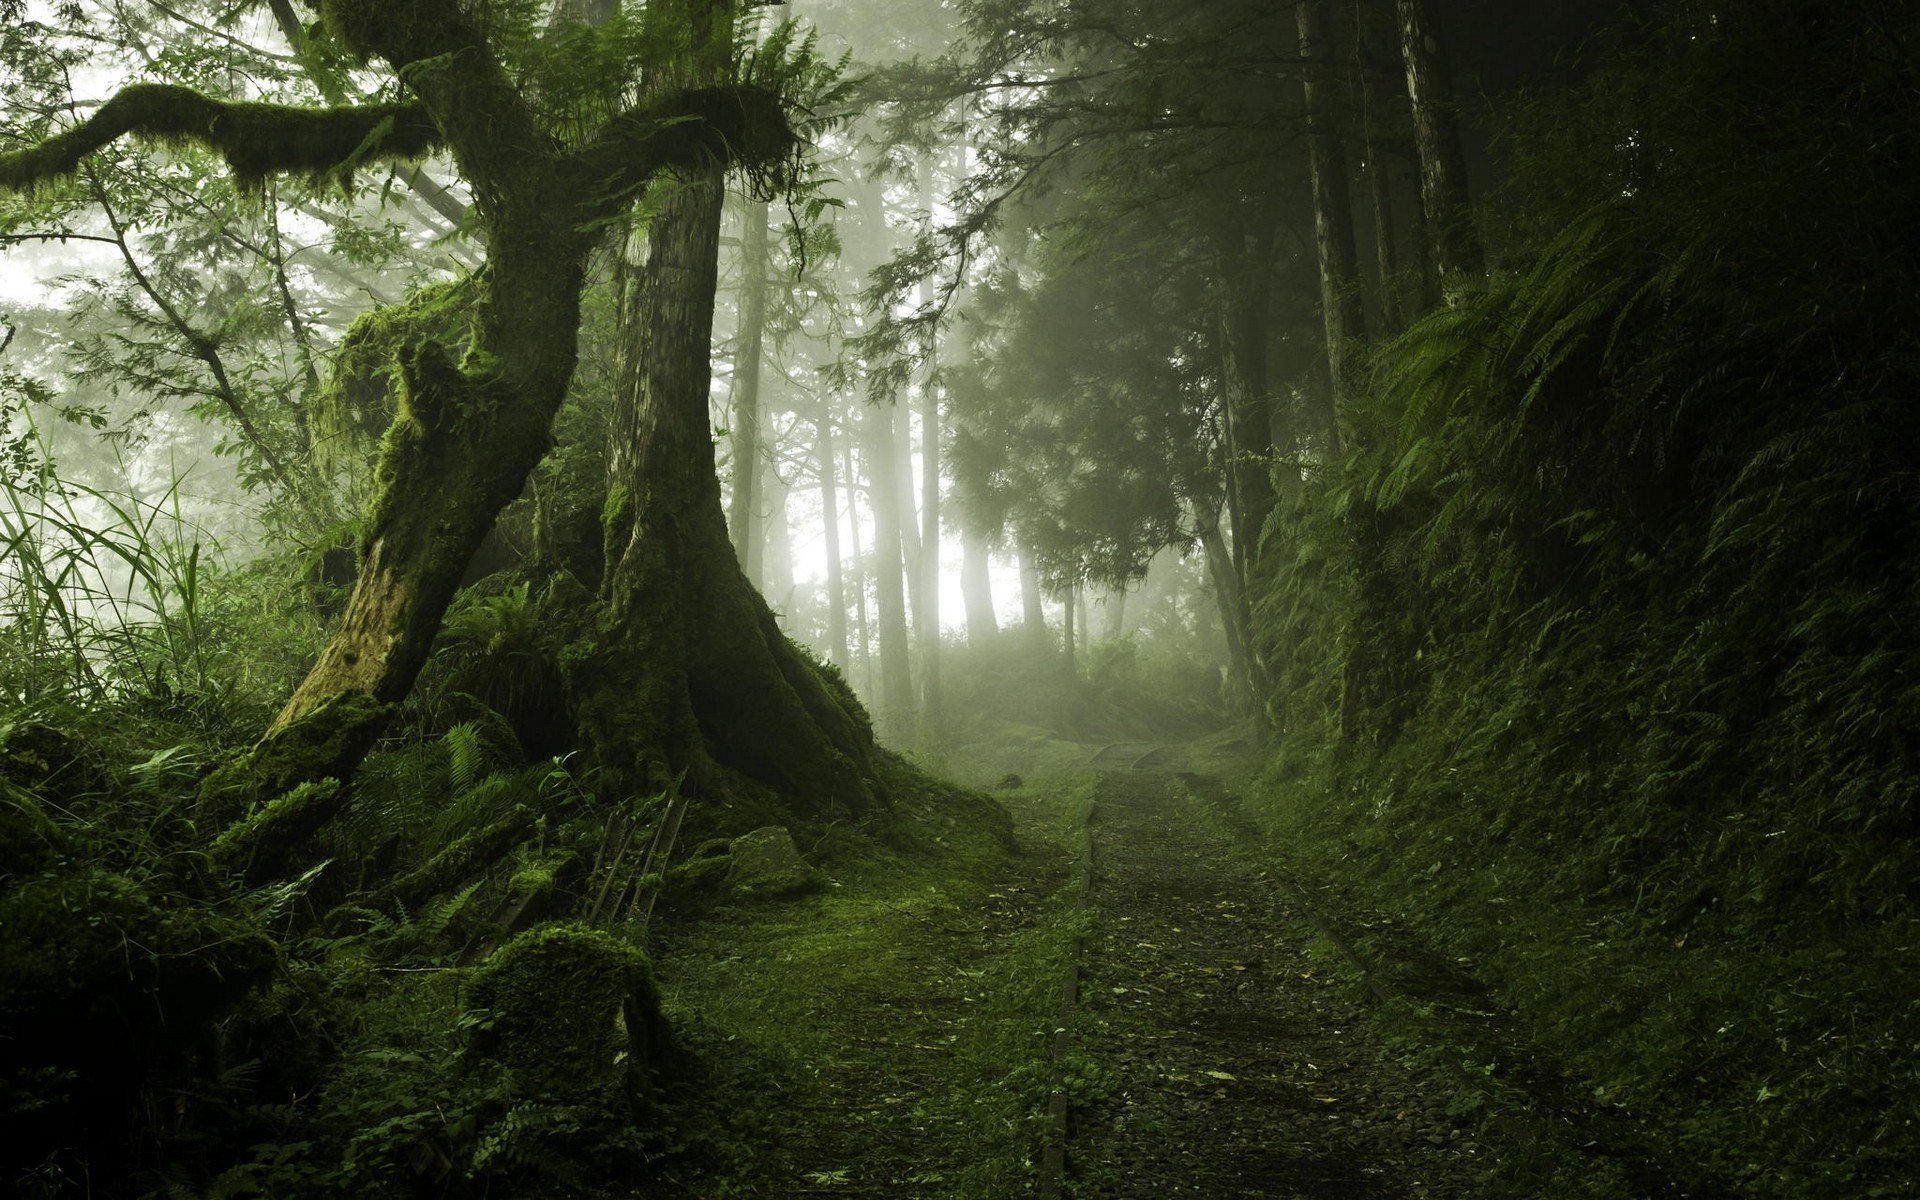 fog, Tree, Forest, Autumn, Nature, Beauty, Mist, Landscape